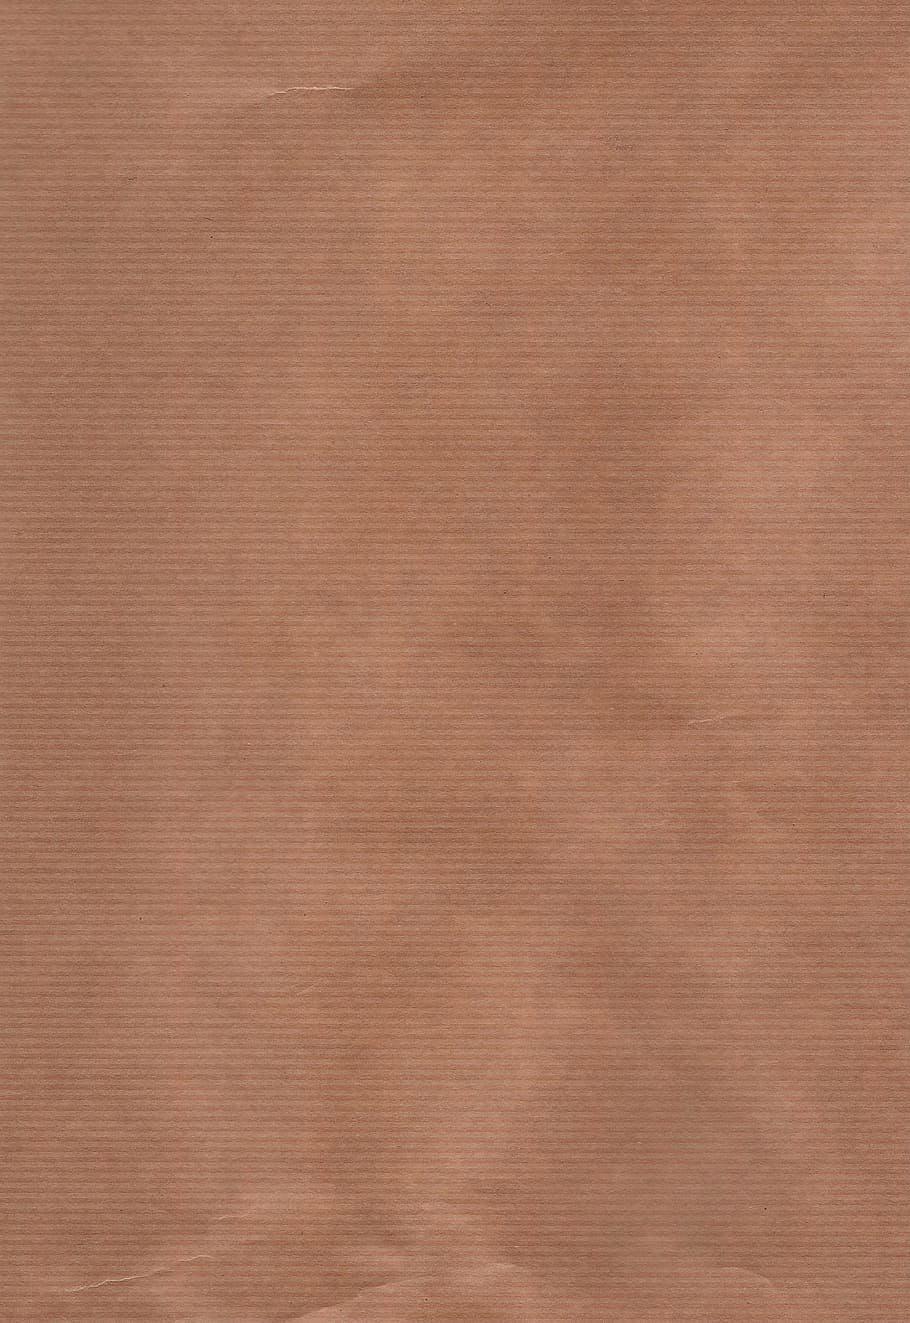 Brown Kraft Paper Background Full Frame Texture Stock Photo by  ©sergii.kl.ua 618005252